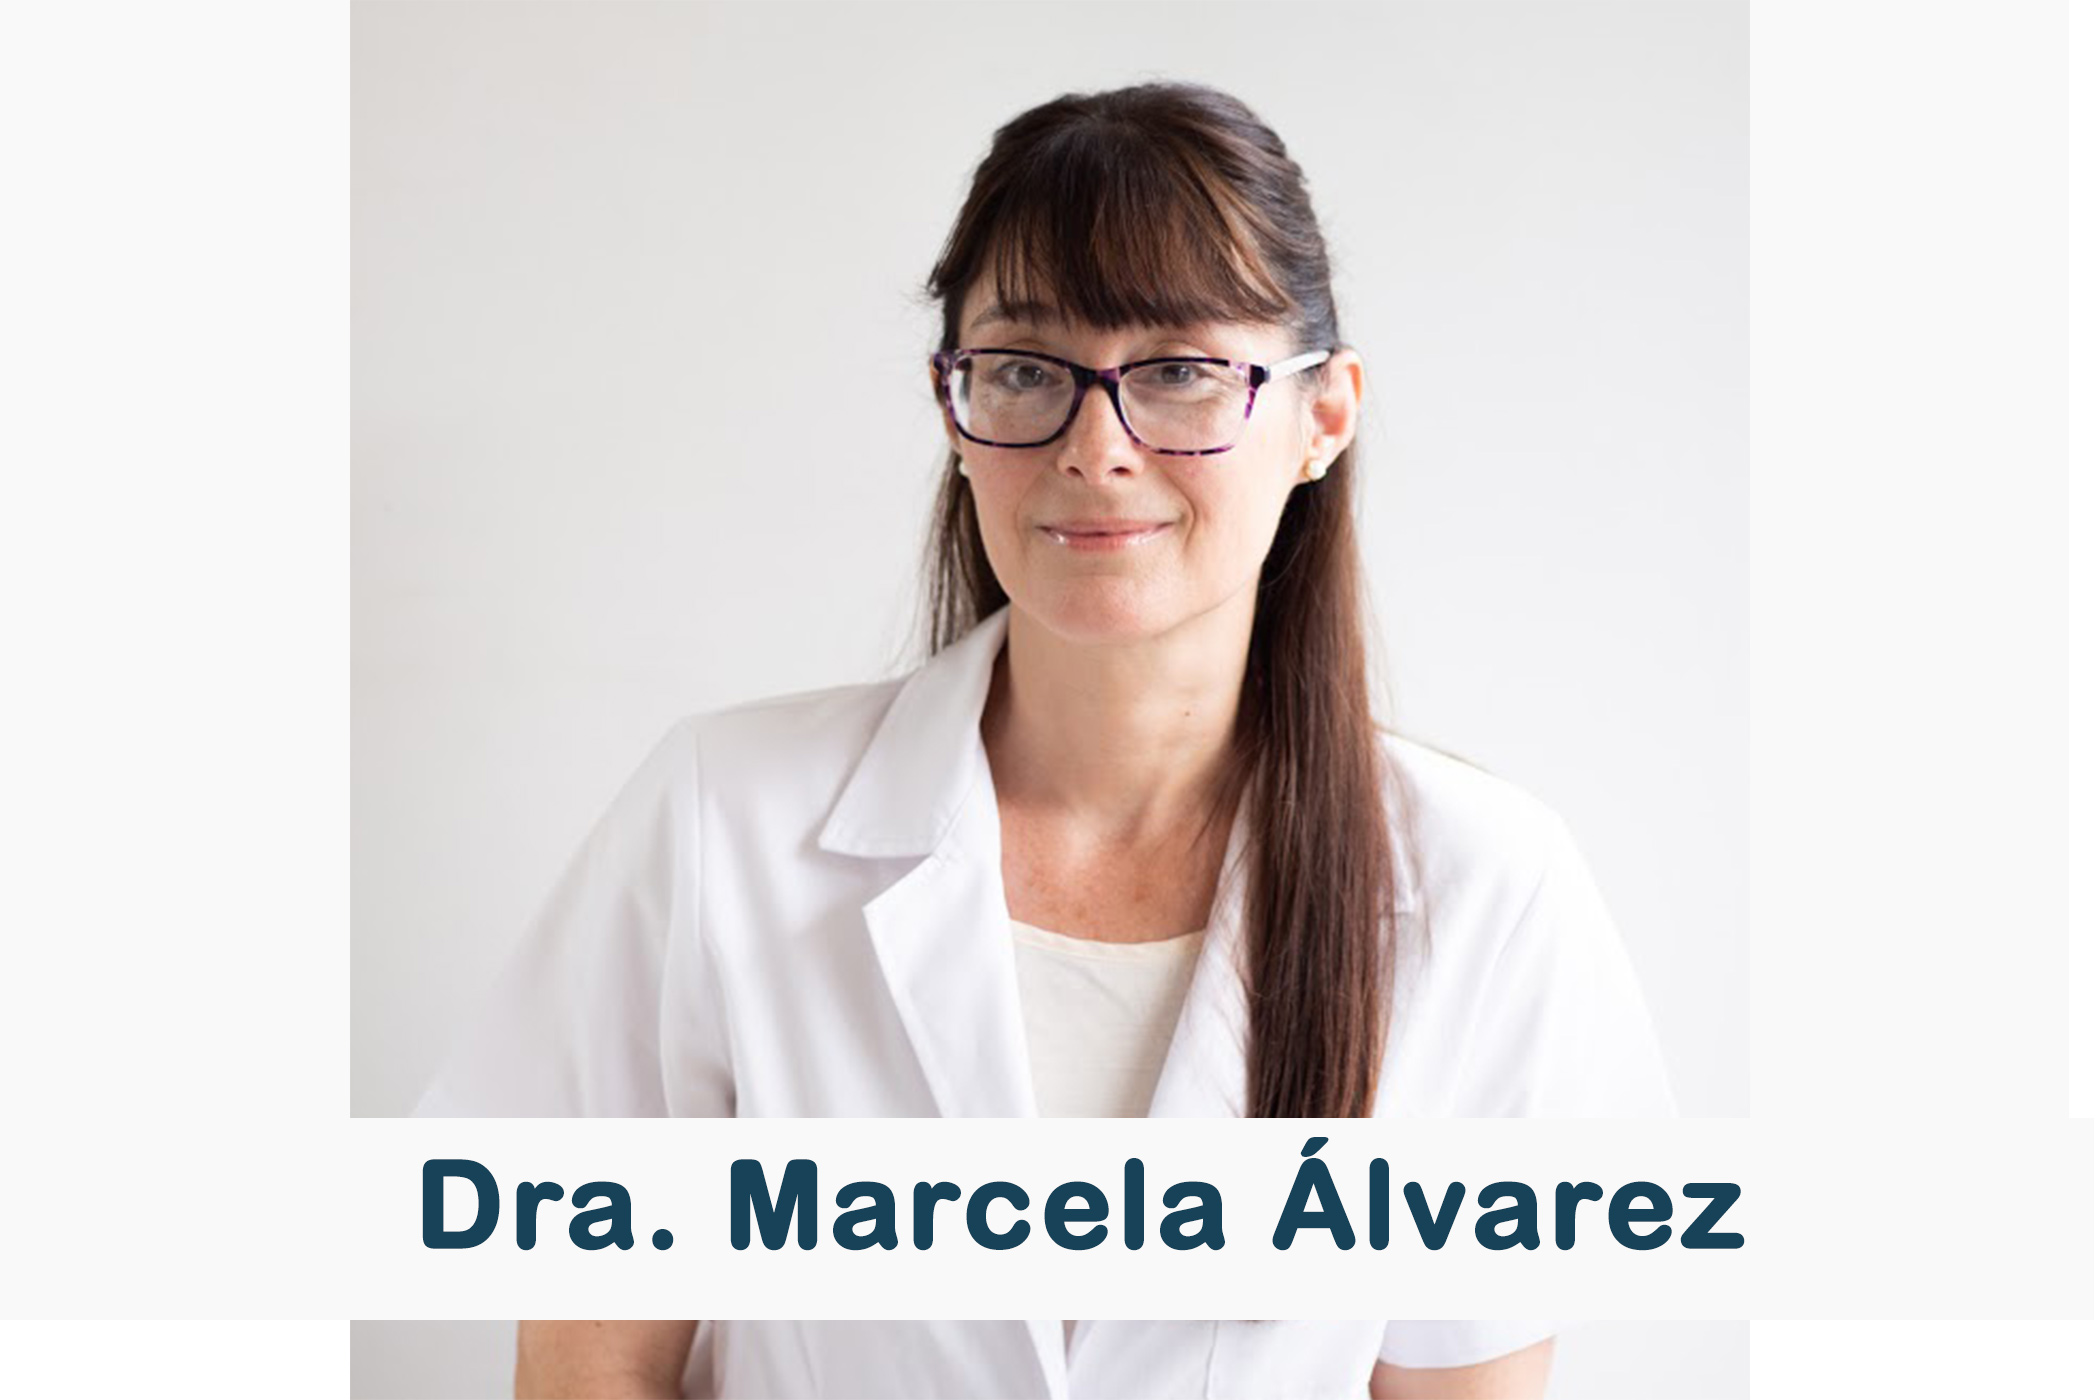 Dra. Marcela Alvarez